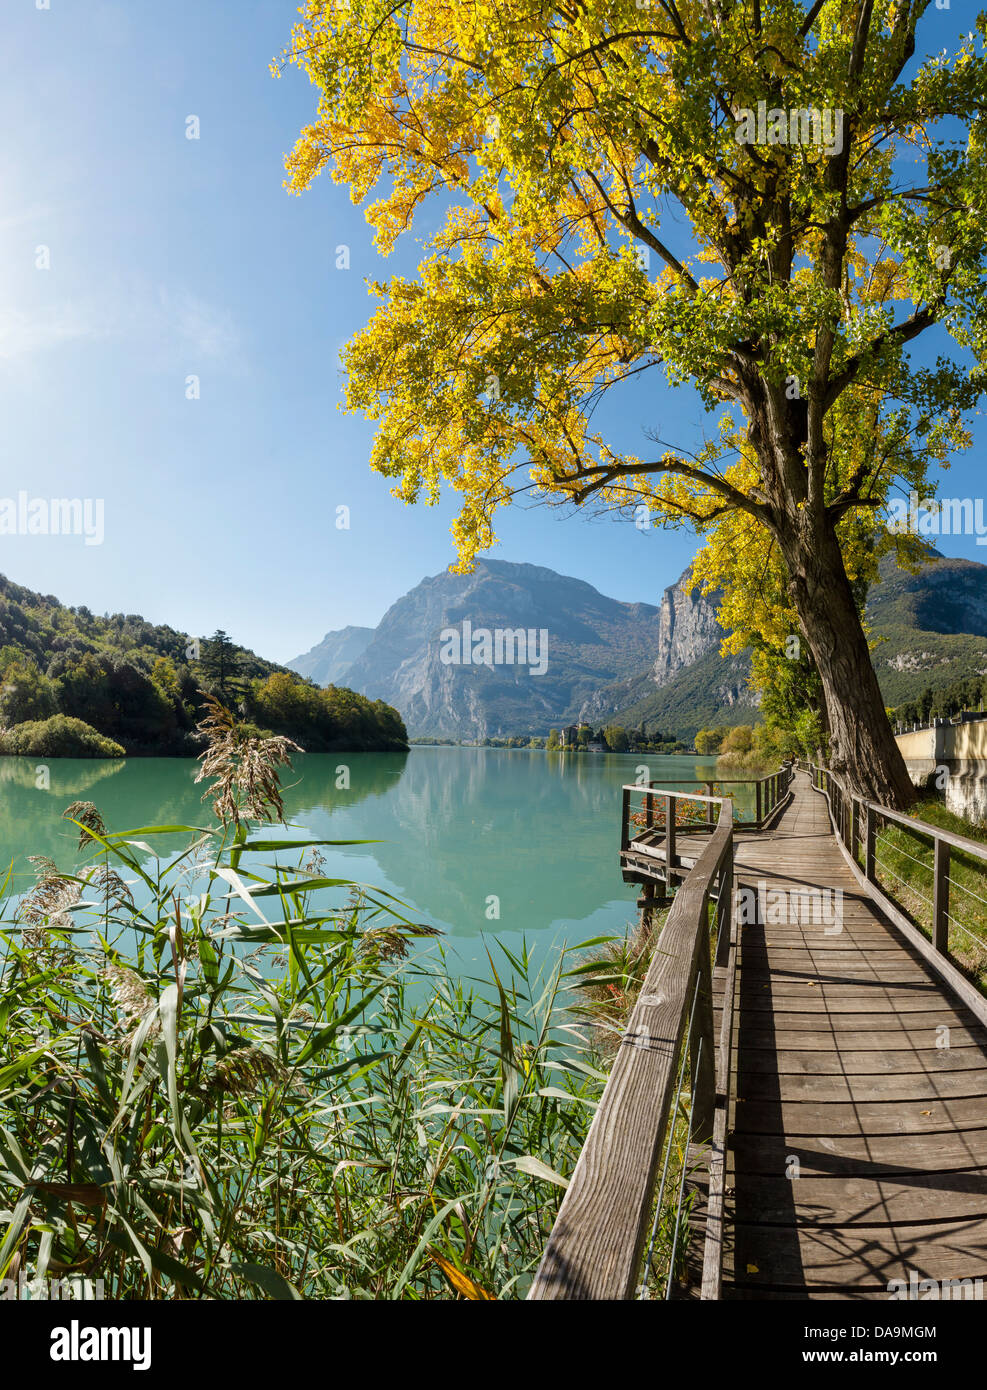 Italy, Europe, Trentino, Sarche, Lago di Toblino, Toblino, landscape, water, trees, autumn, mountains, lake, Stock Photo